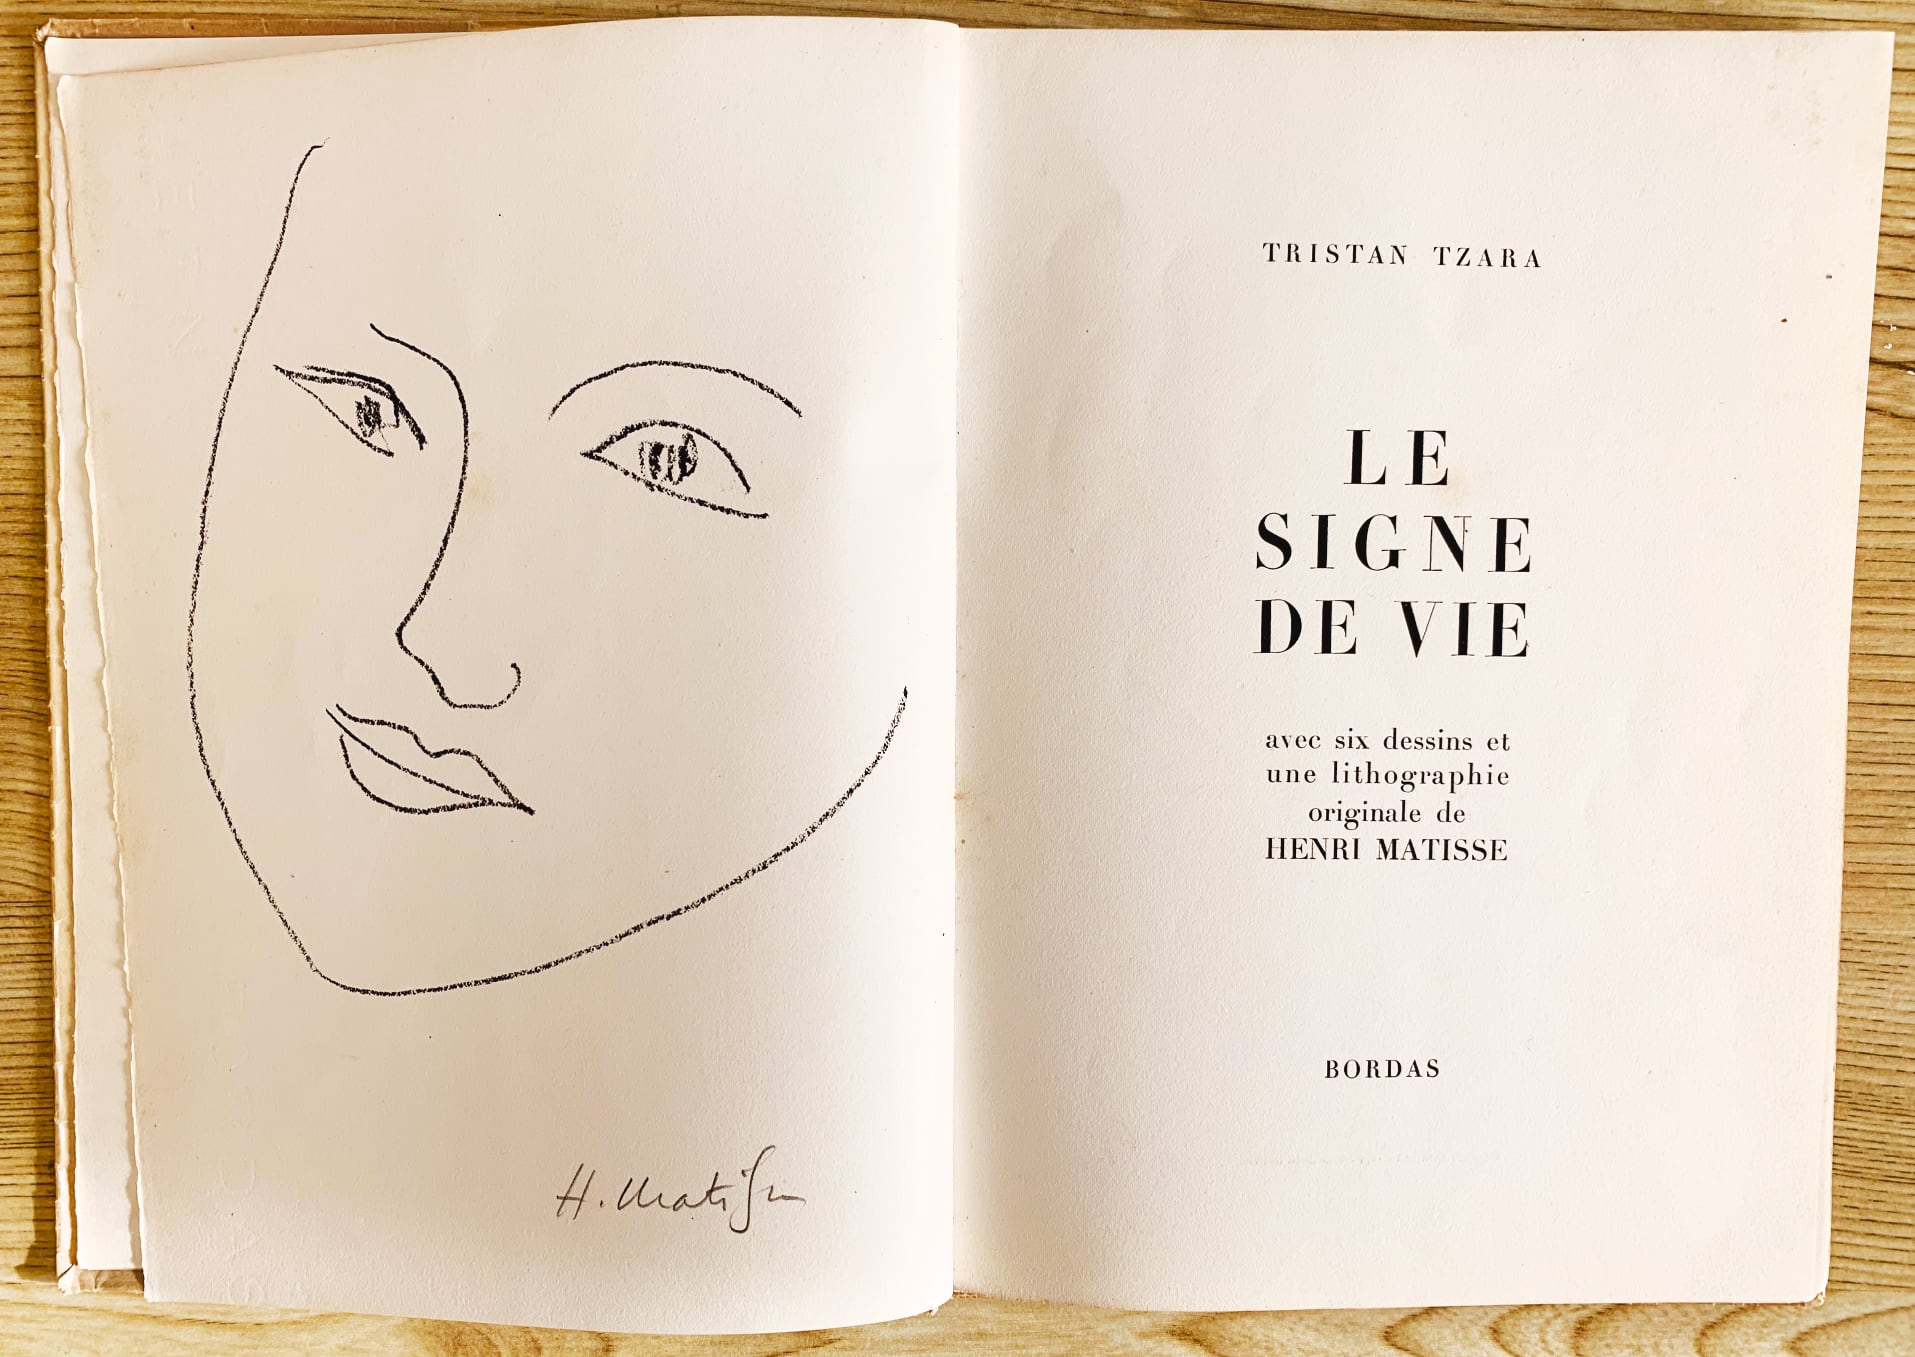 Henri Matisse - Tristan Tzara (Le Signe de Vie)